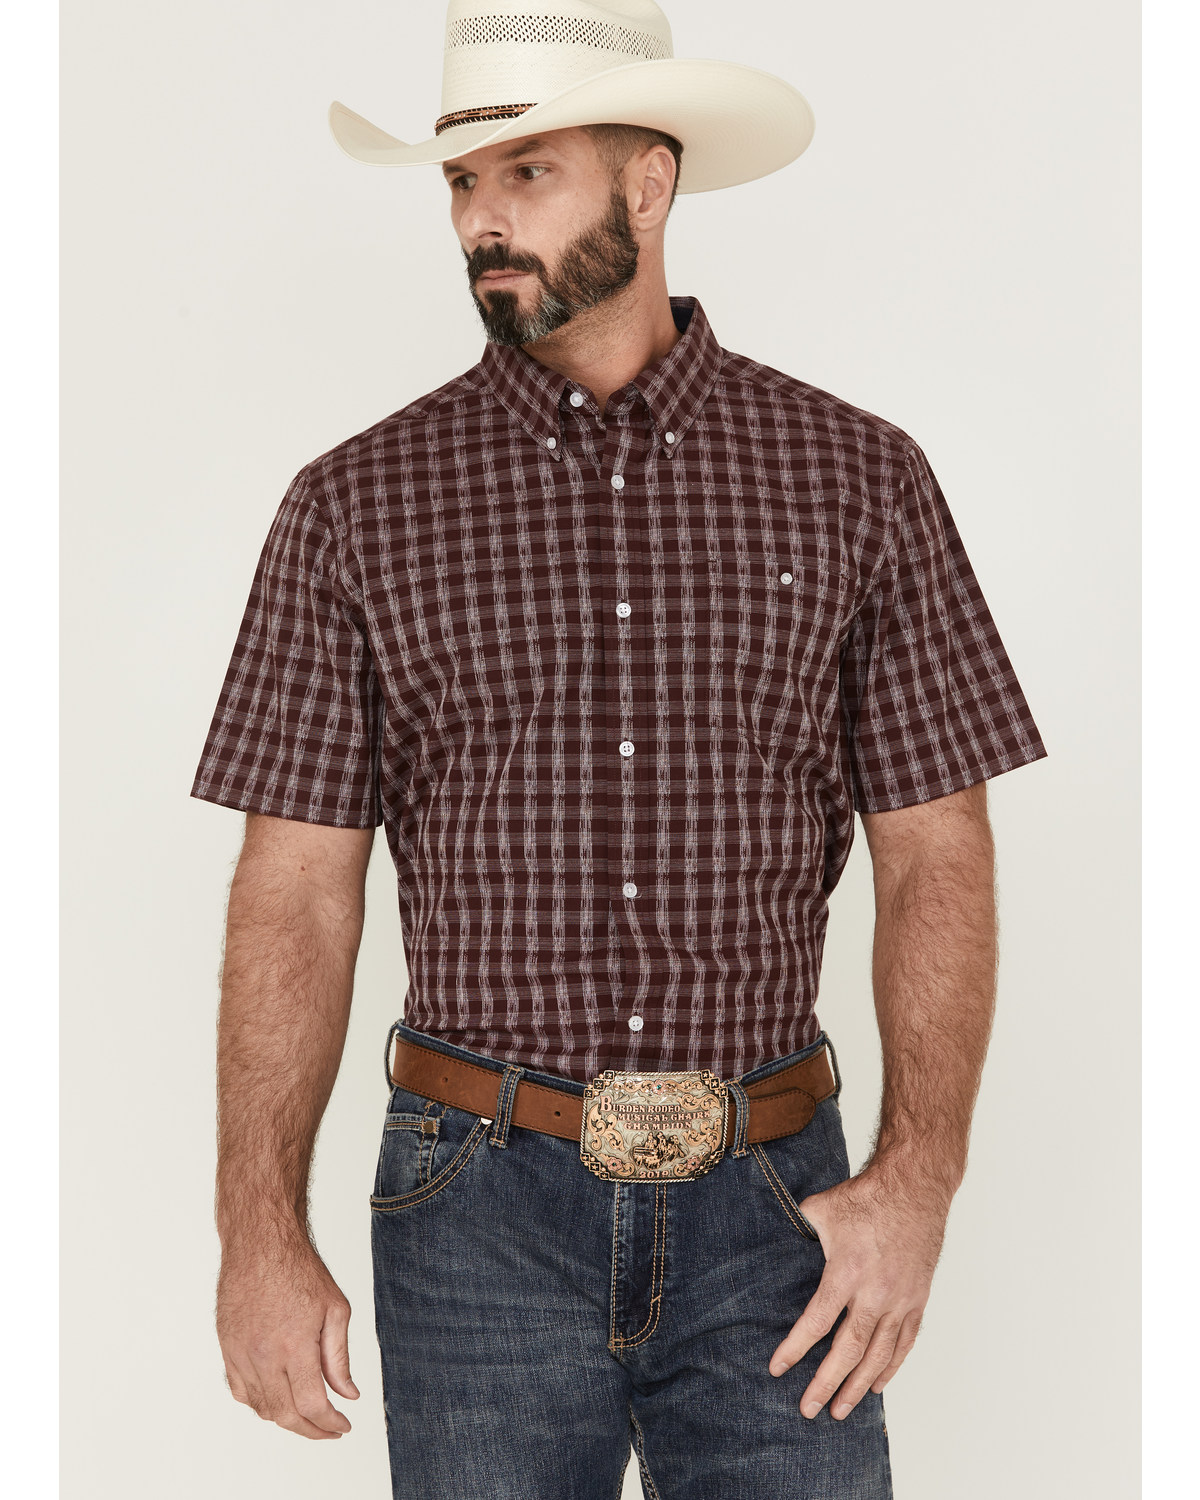 RANK 45® Men's Pick Up Small Plaid Print Short Sleeve Button-Down Western Shirt